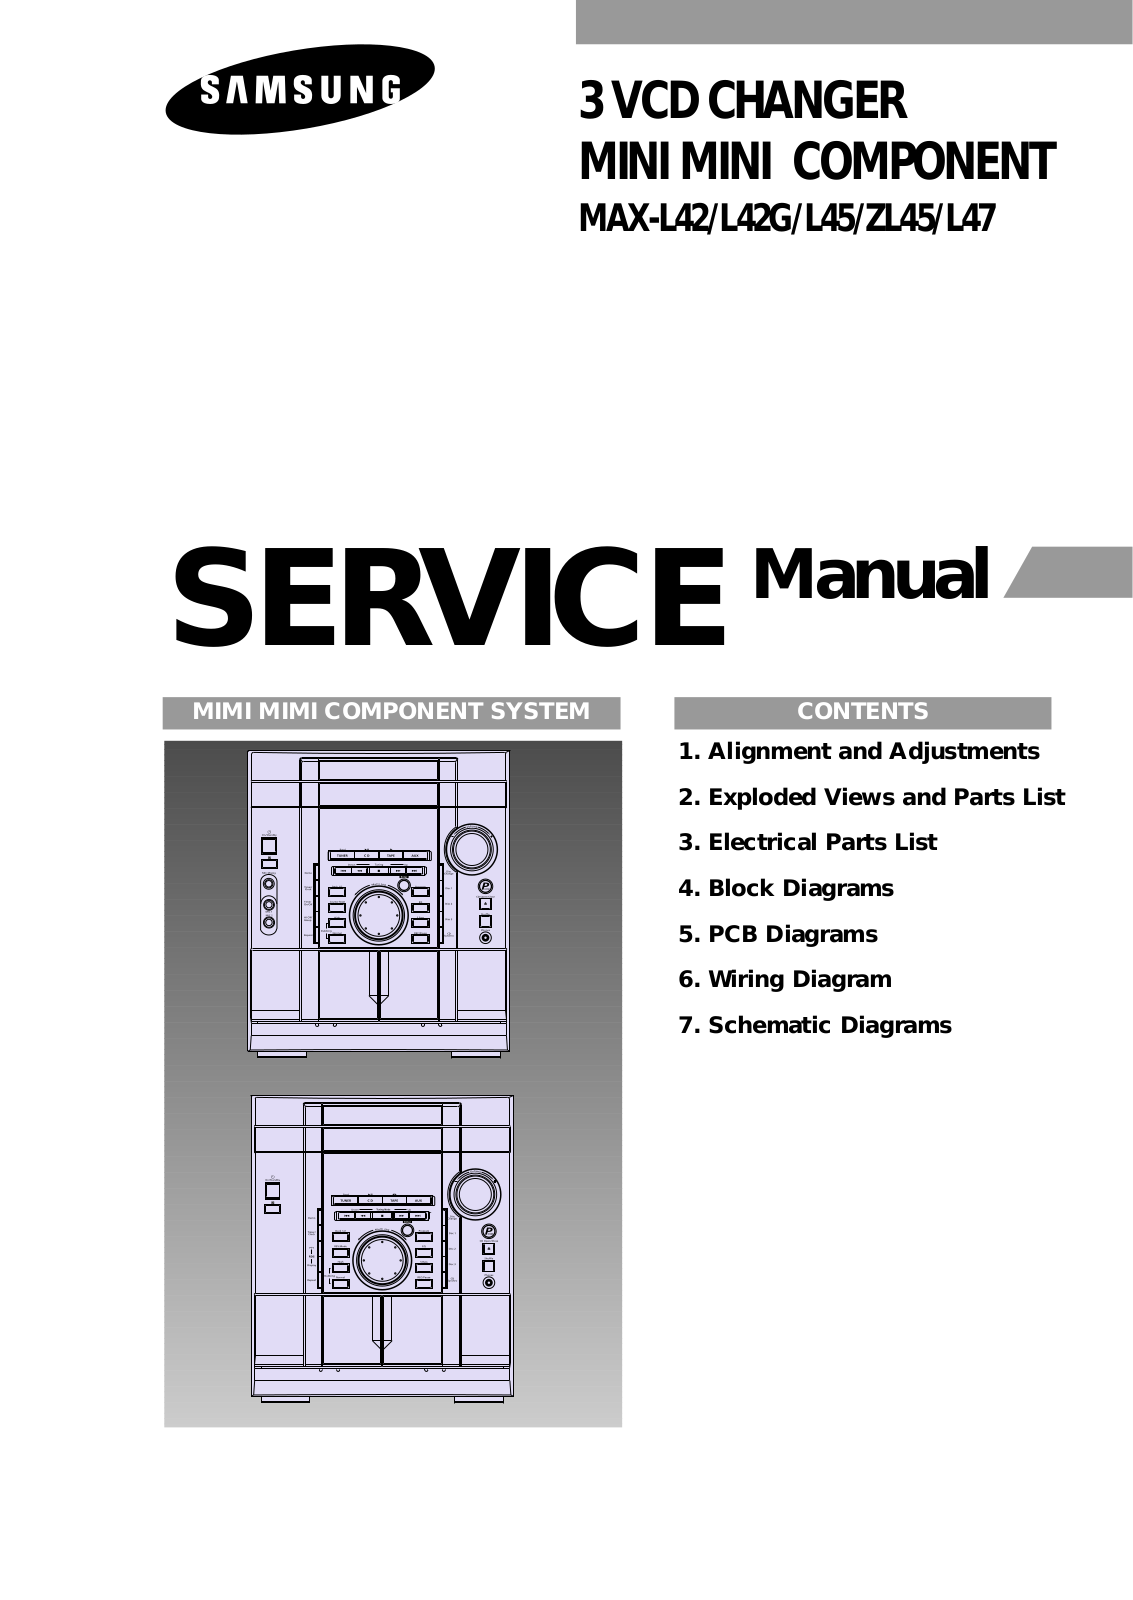 SAMSUNG MAX-L42, MAX-L42G, MAX-L45, MAX-L47, MAX-ZL45 Service Manual